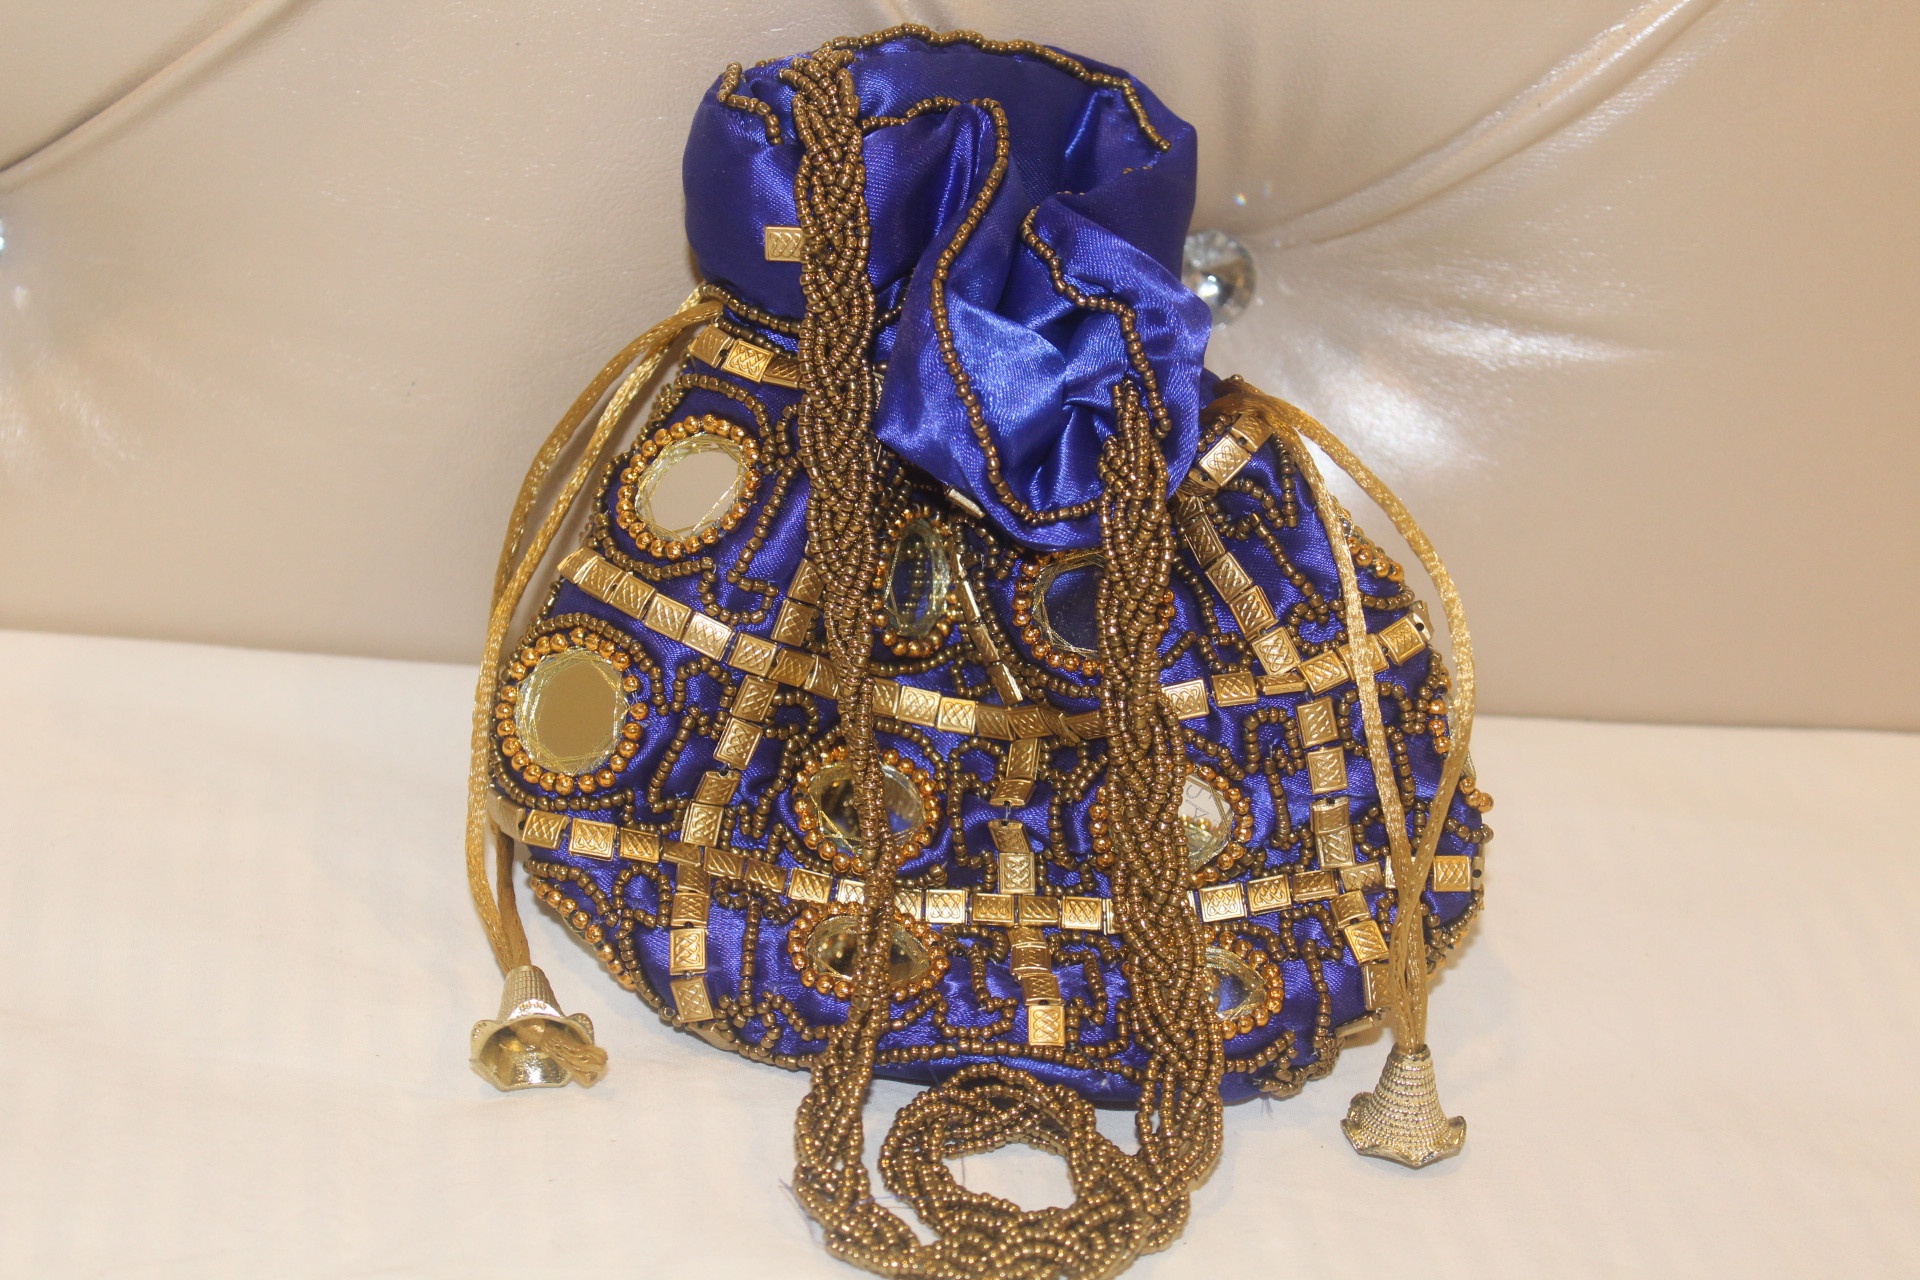 myDsGifts Women's Designer Ethnic Potli Bag with Beadwork Satin Fabric  available on Amazon (Single Bag,Golden) : Amazon.in: Shoes & Handbags